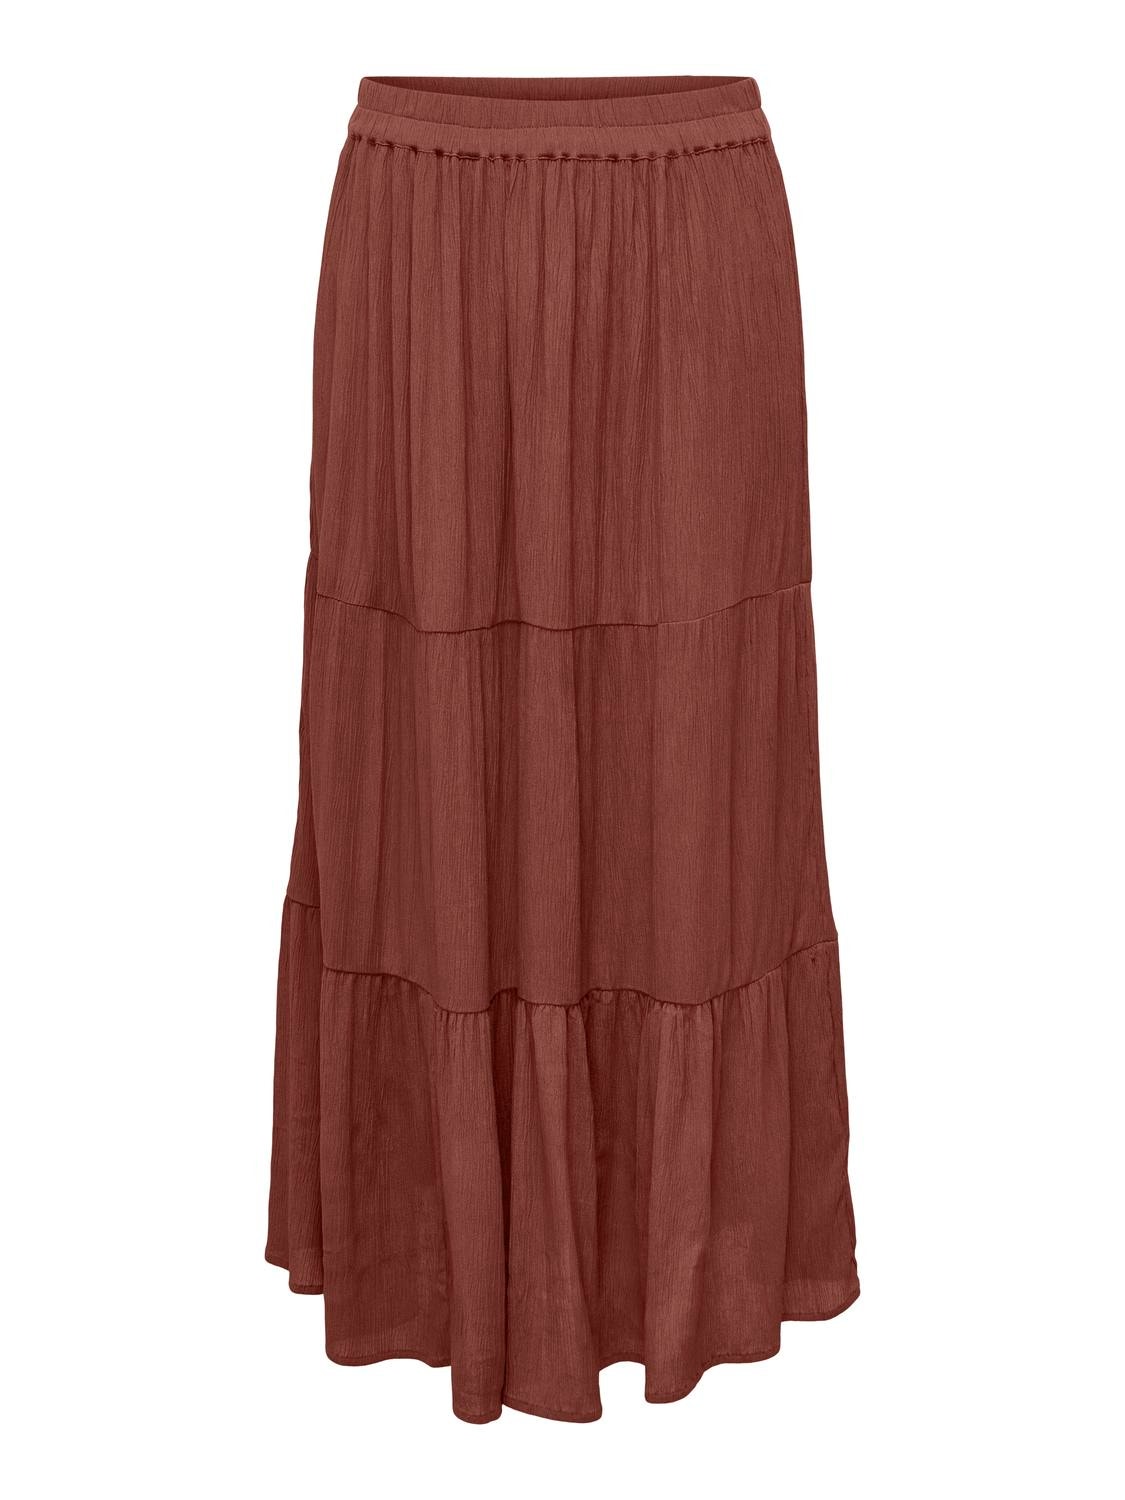 ONLY Midi skirt -Henna - 15324808